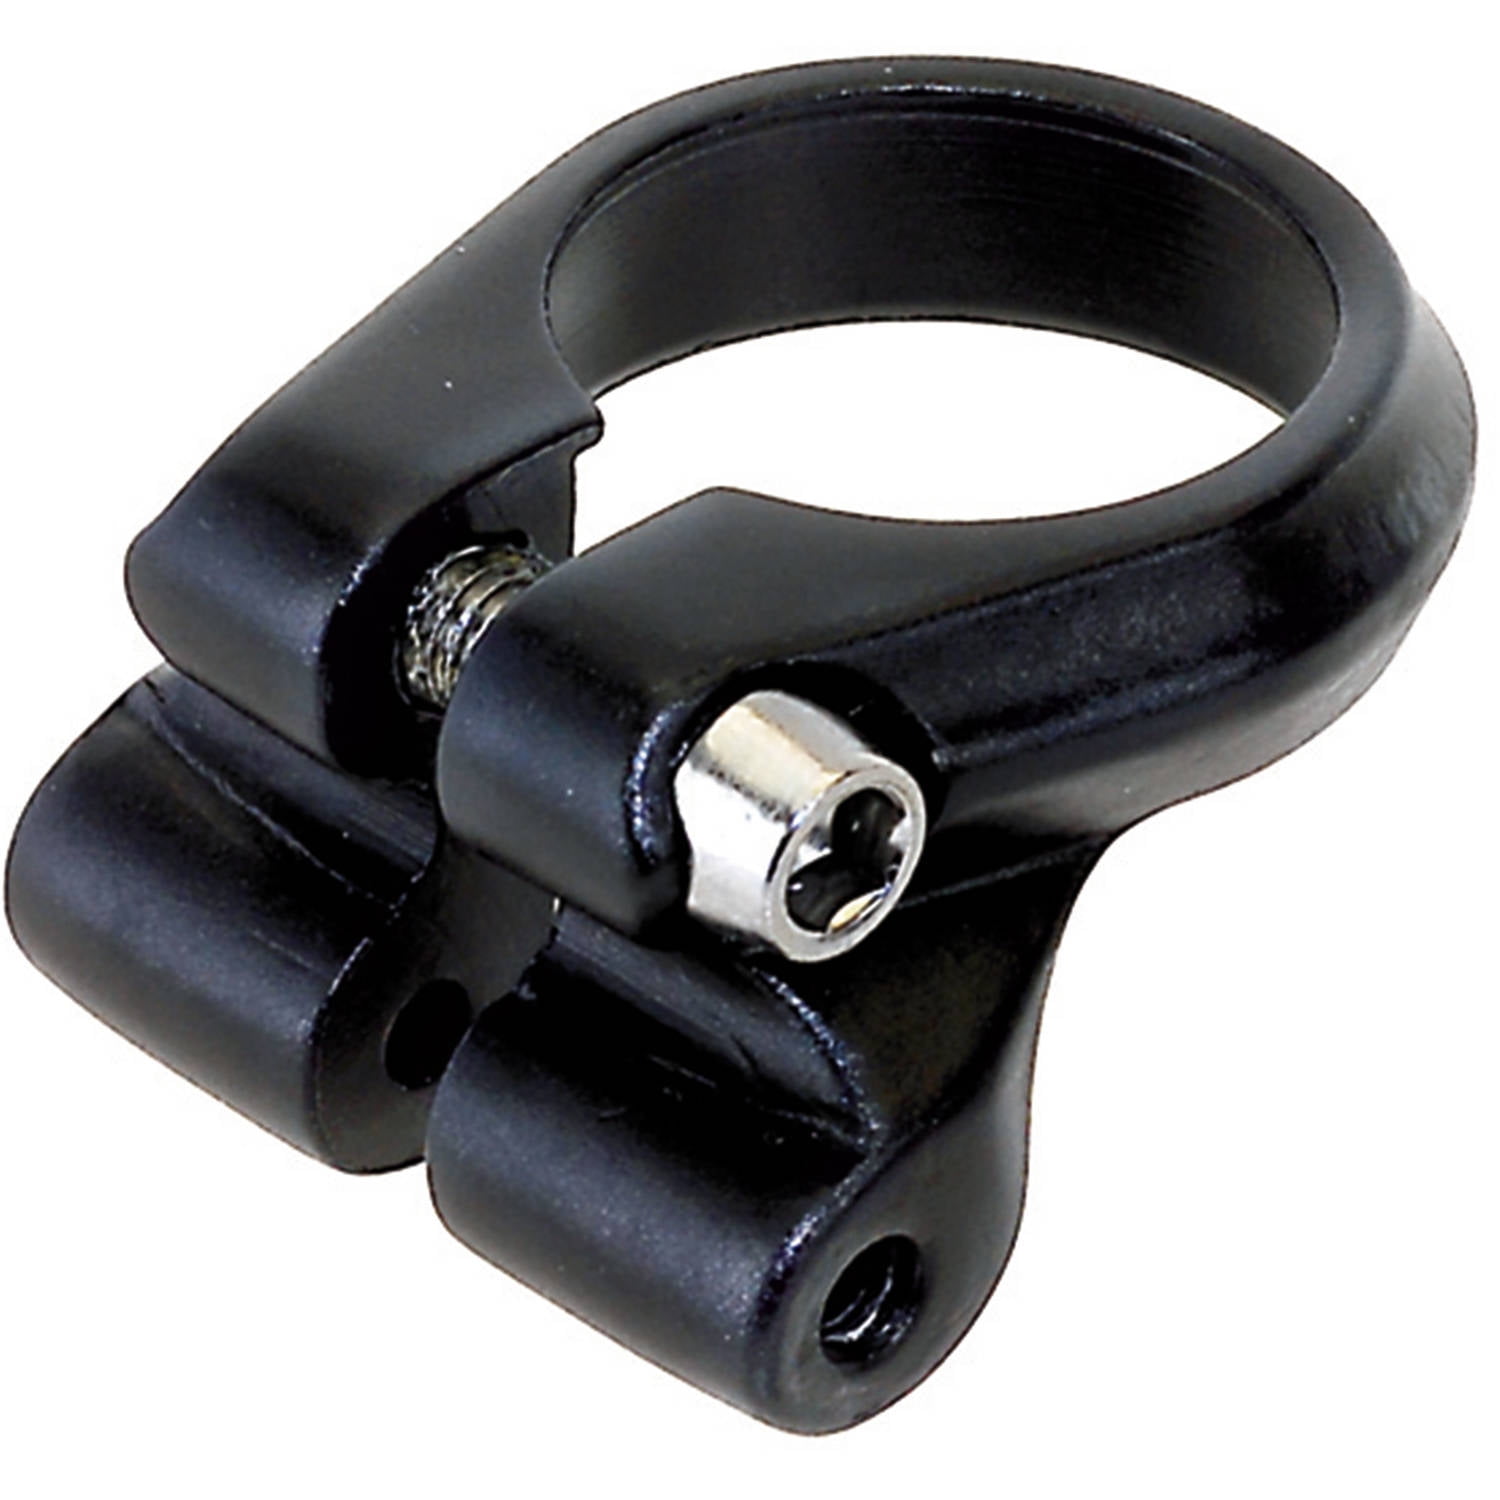 Bicycle Bike Rear Rack Adapter/Converter Seatpost Clamp 28.6mm